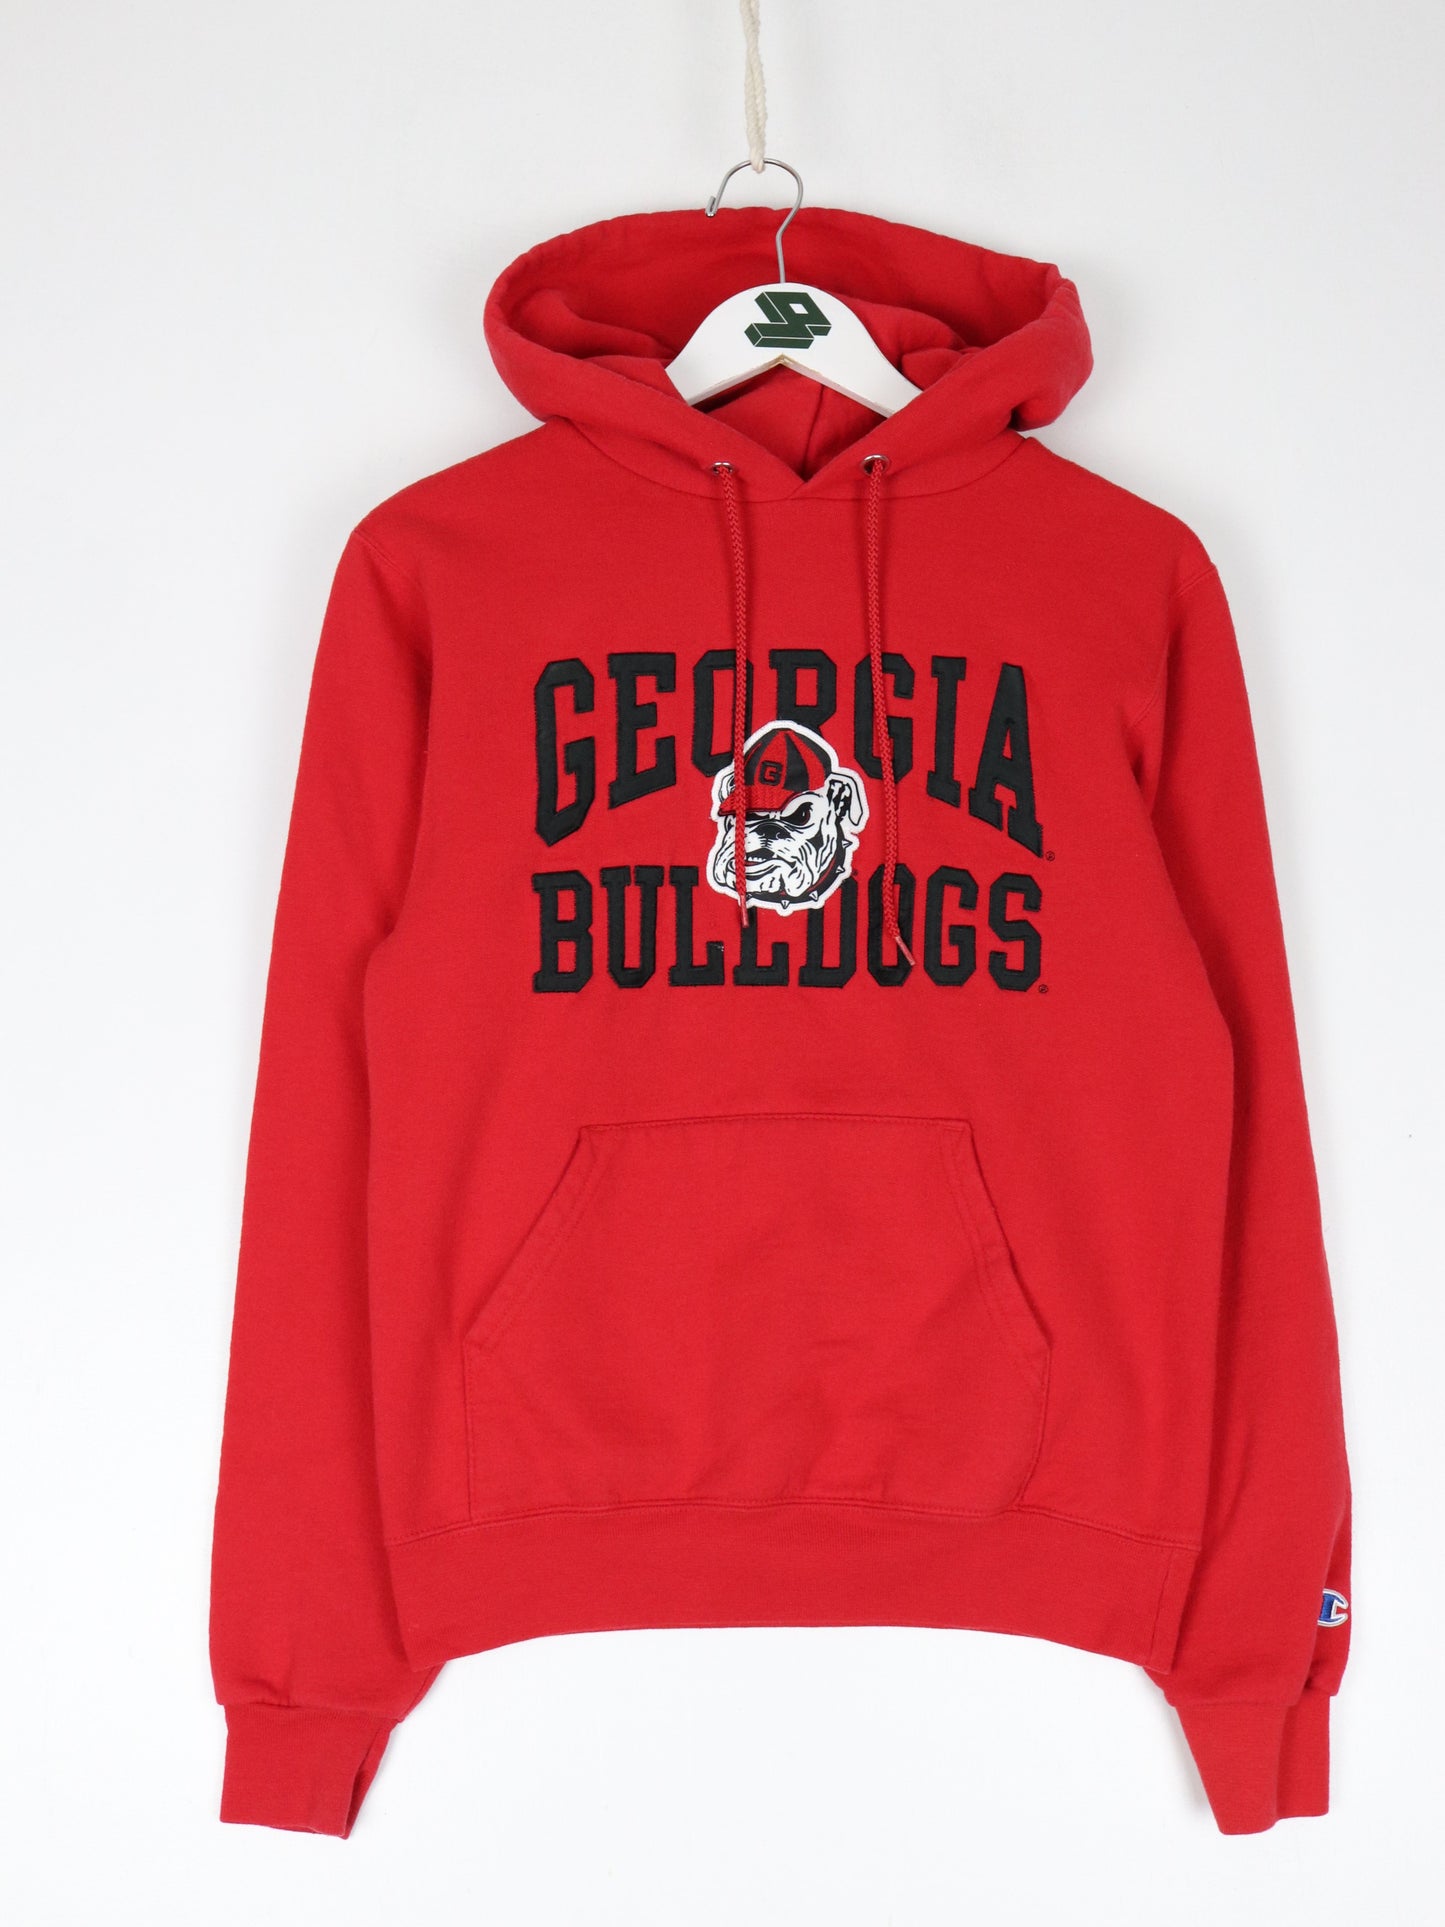 Georgia Bulldogs Sweatshirt Mens XS Red Champion College Hoodie